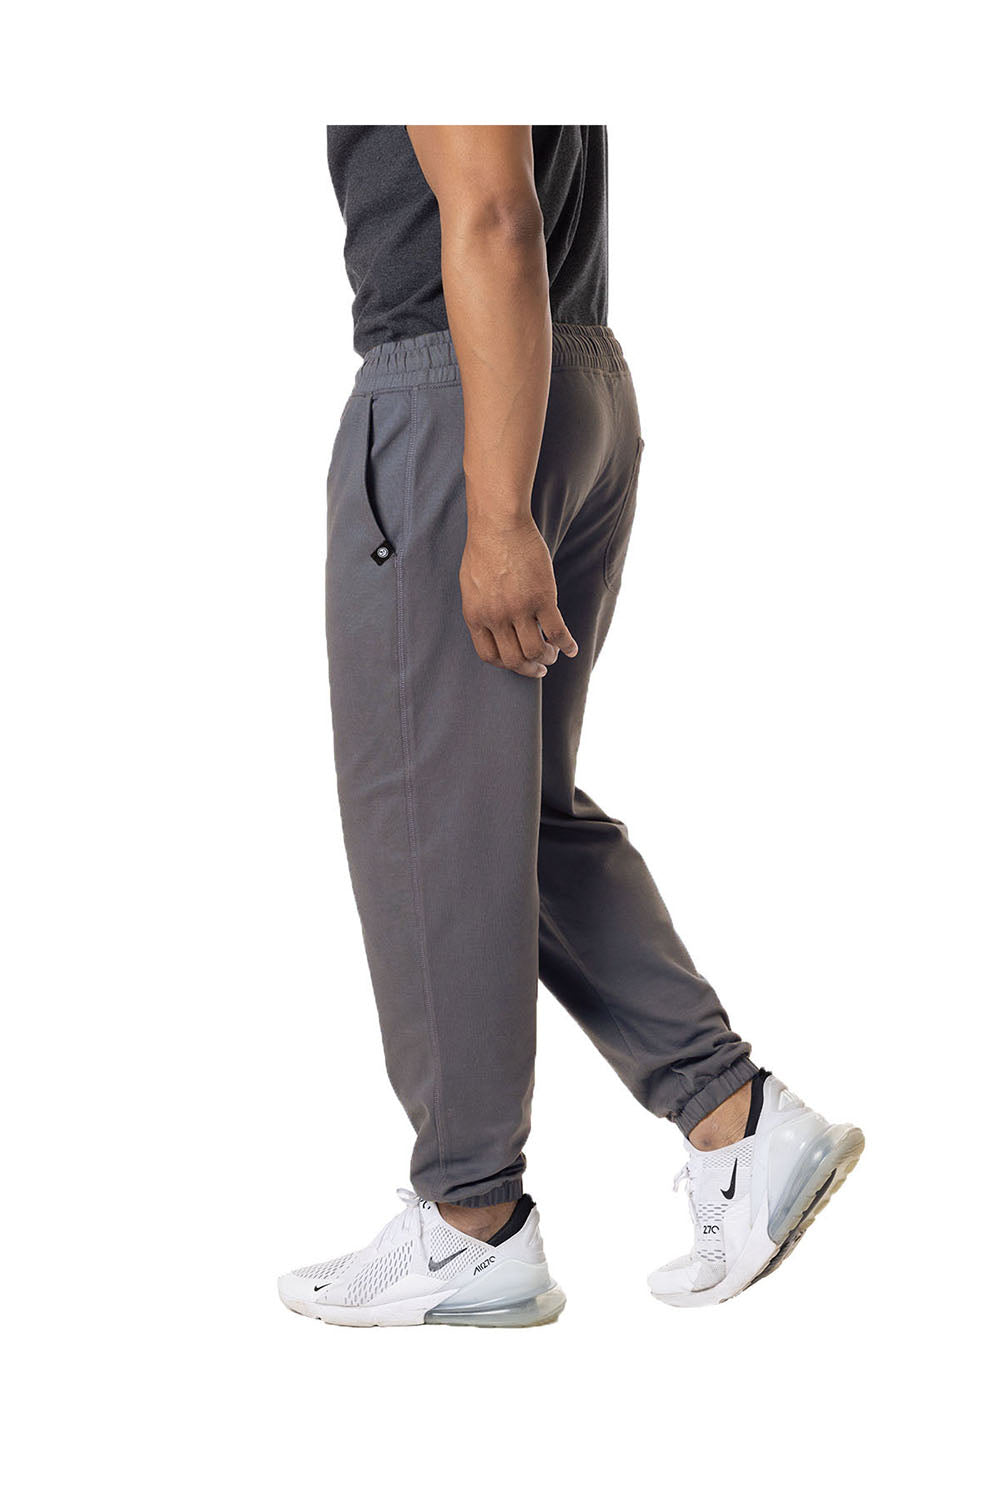 Econscious EC5400 Mens Motion Jogger Sweatpants w/ Pockets Graphite Grey Side